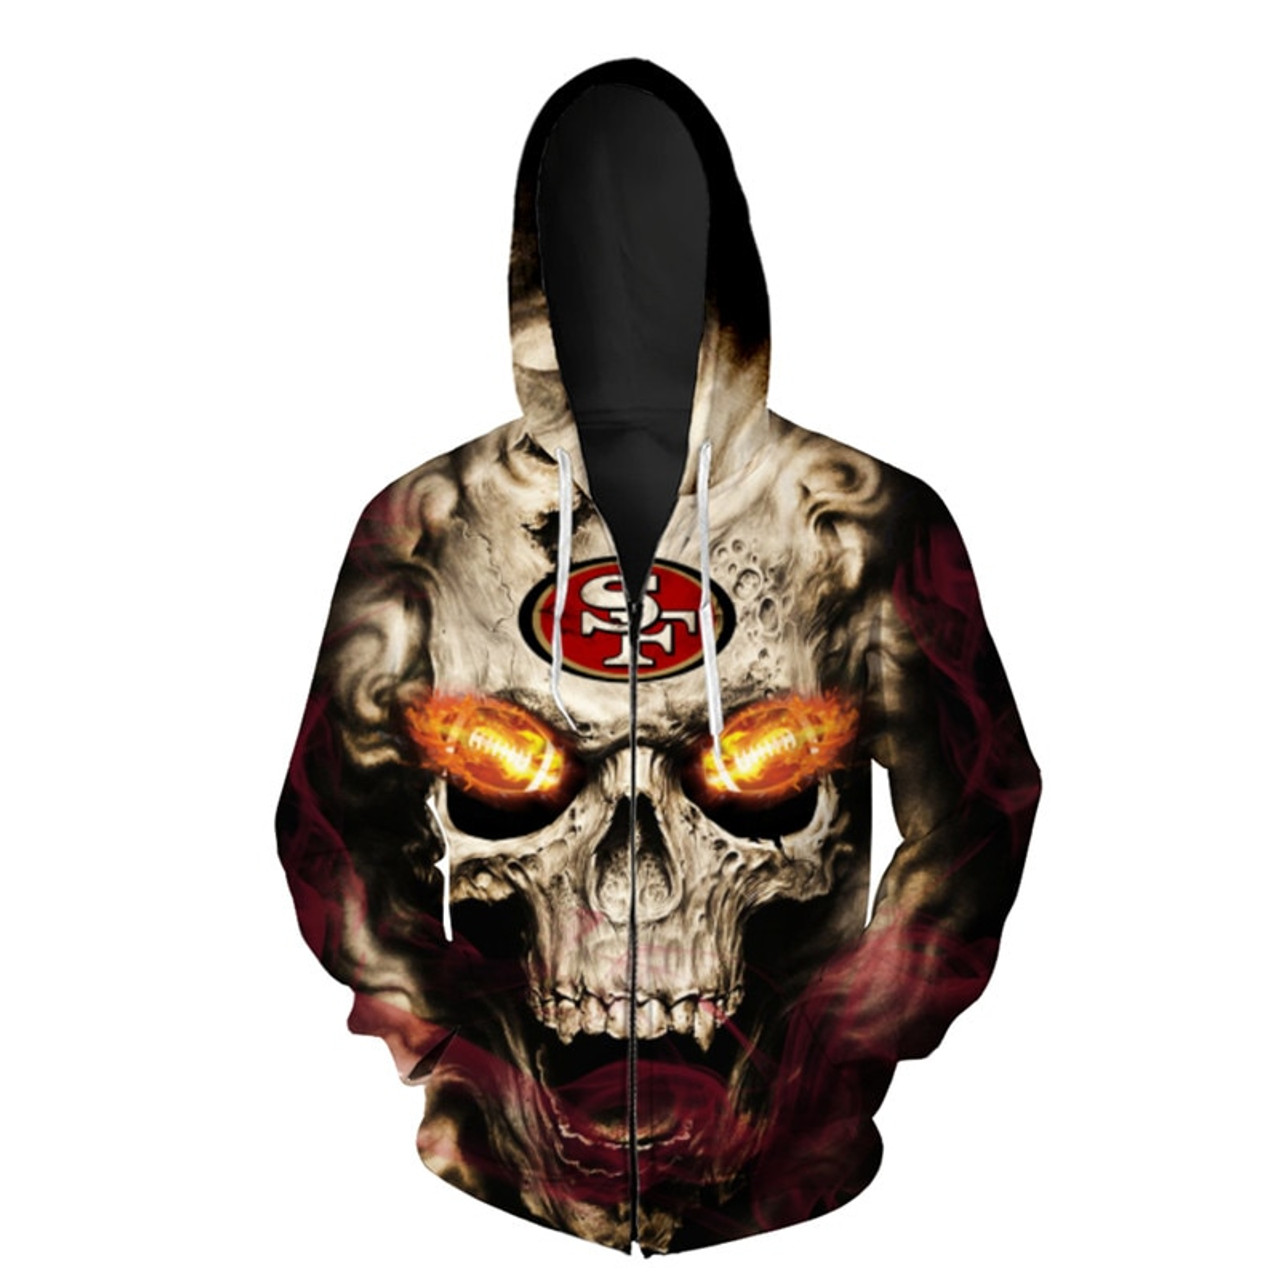 49ers zip up hoodie